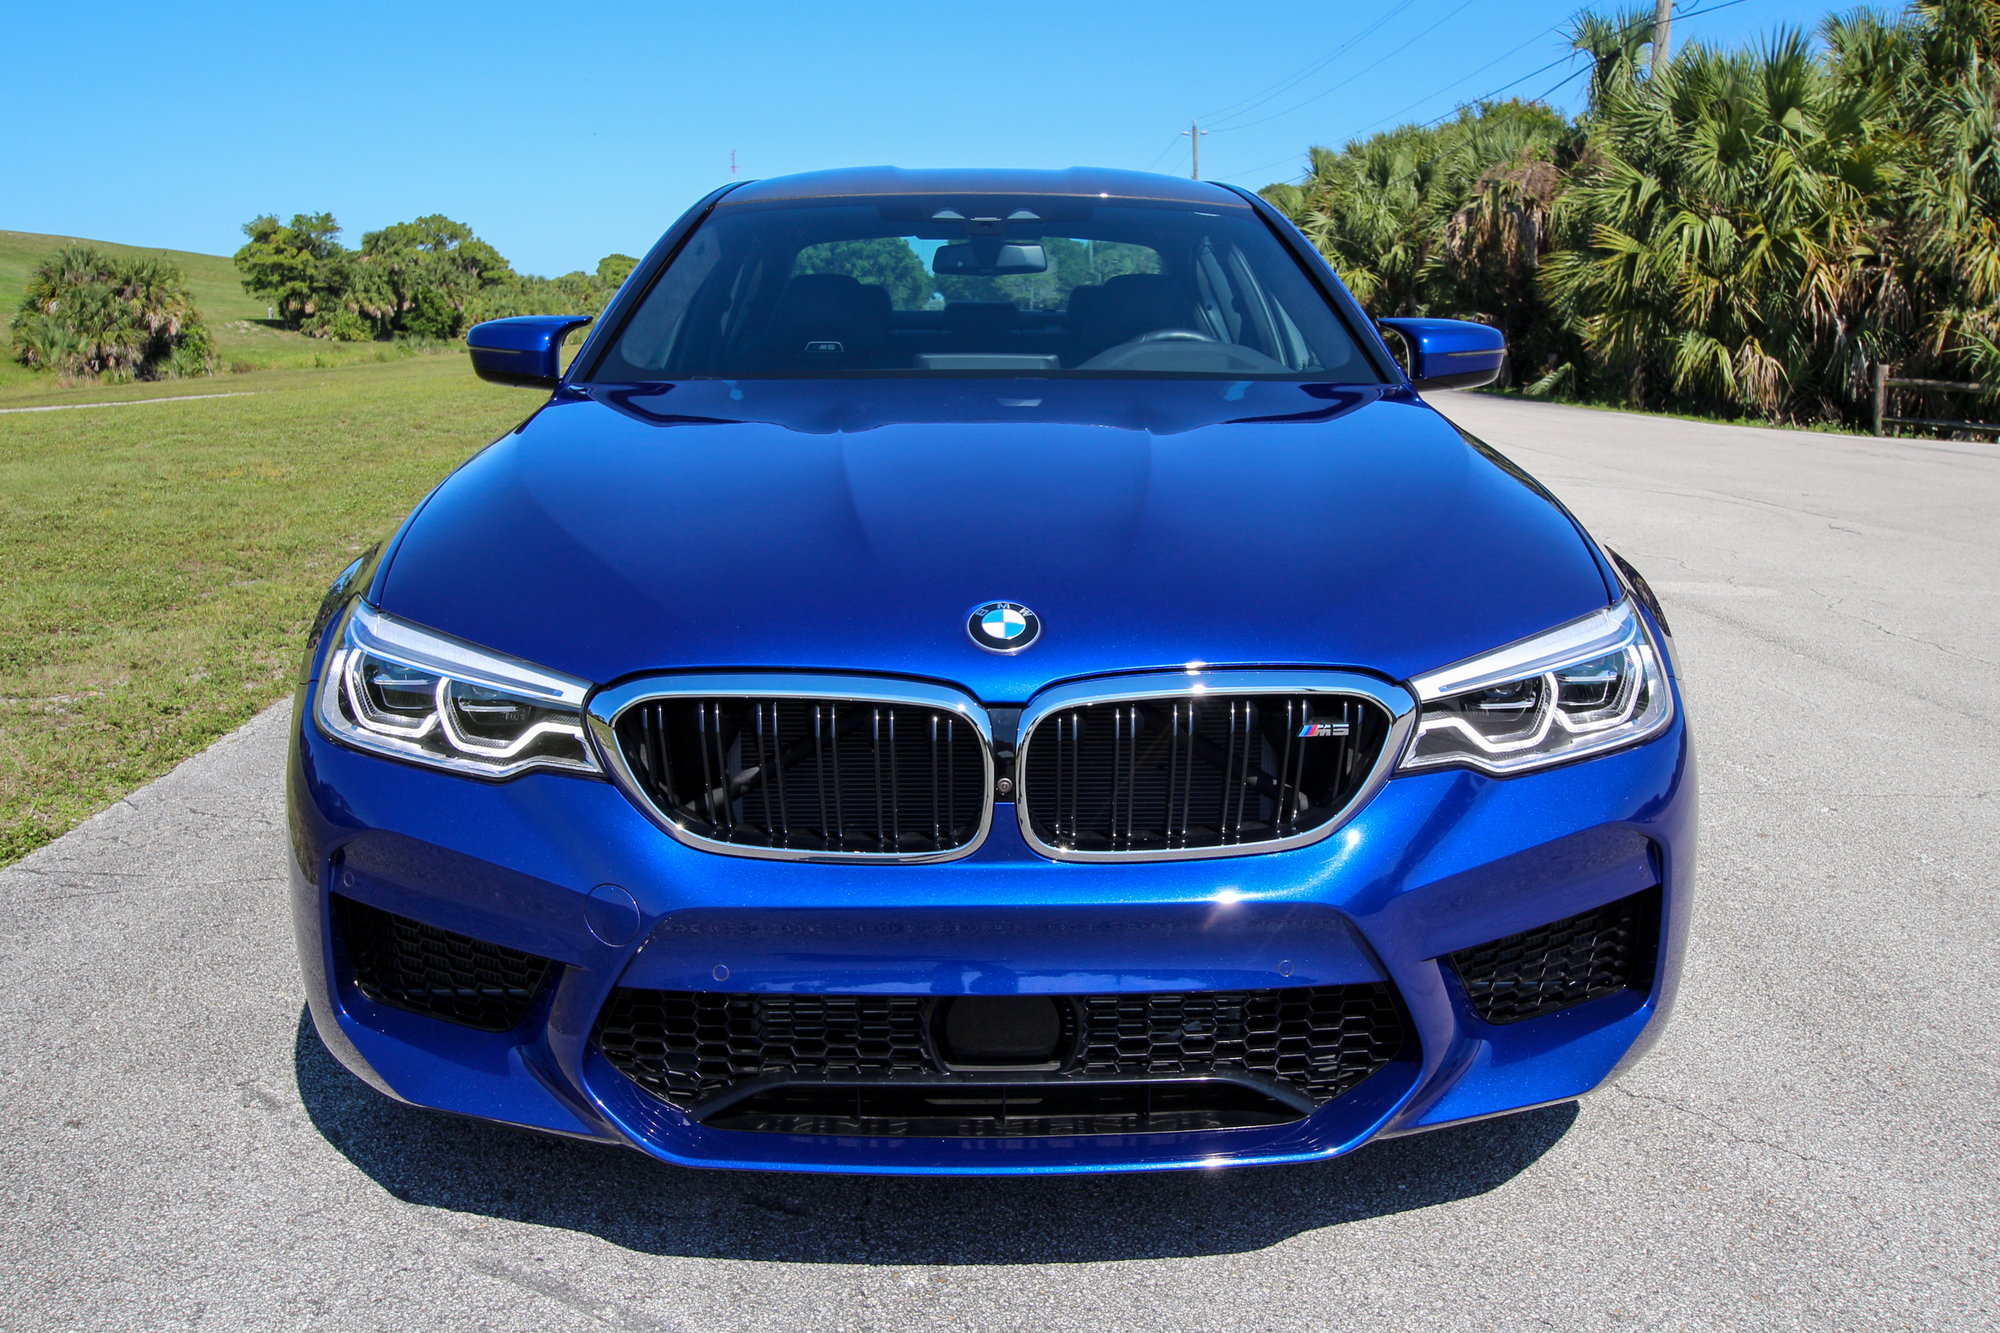 2018 BMW M5 - 2018 BMW M5 in Marina Bay Blue Metallic w/ Executive Pkg - Used - VIN WBSJF0C51JG577499 - 8,832 Miles - 8 cyl - AWD - Automatic - Sedan - Blue - Riviera Beach, FL 33407, United States